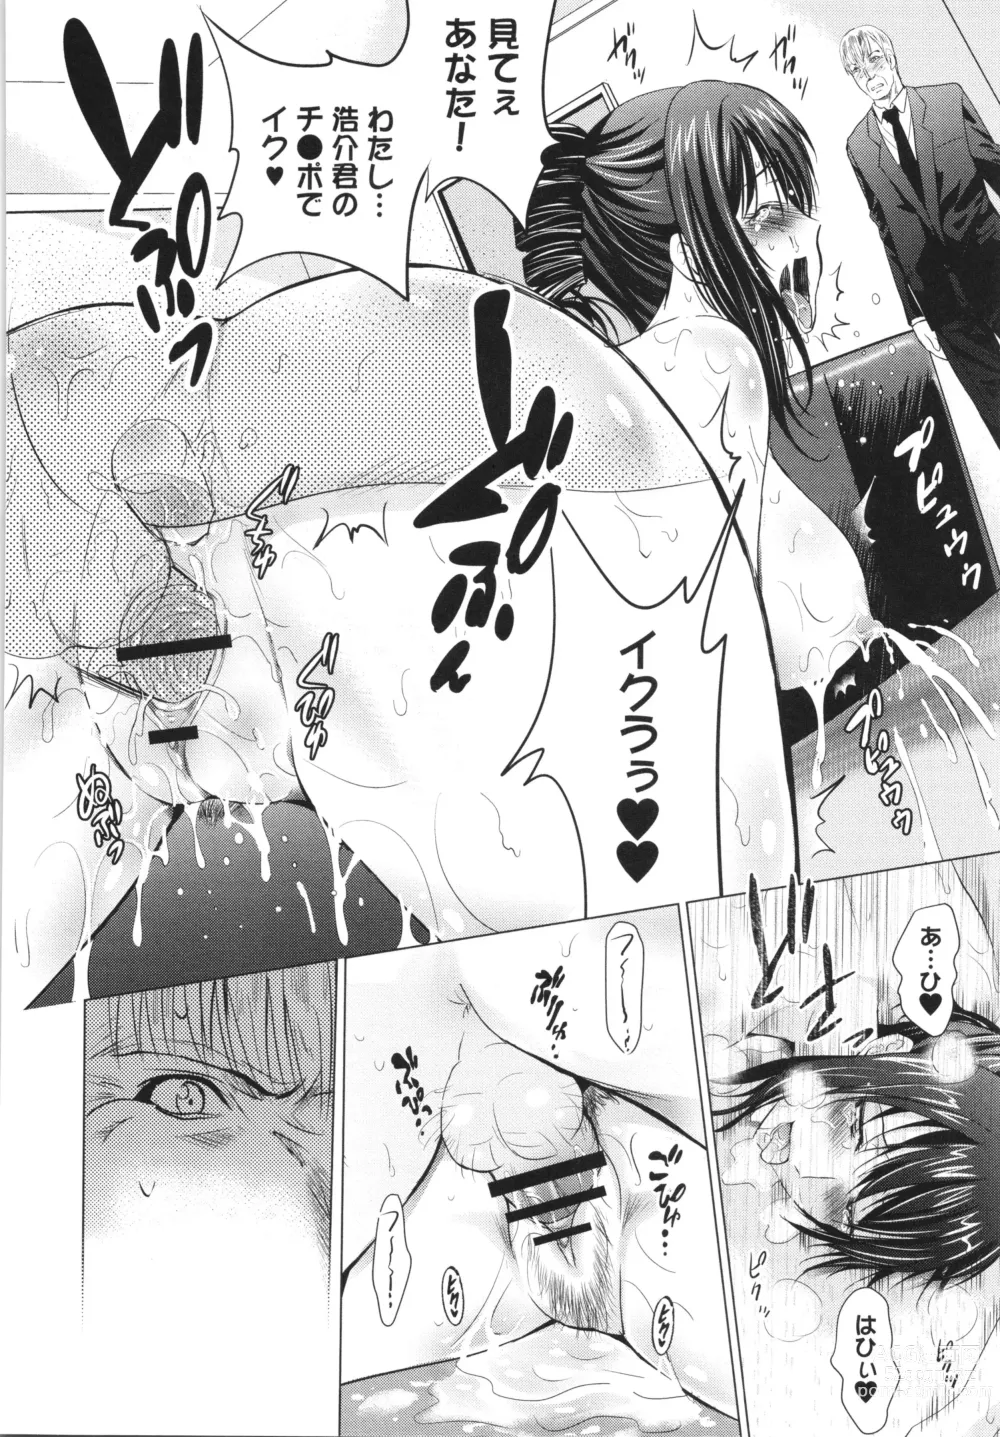 Page 209 of manga Hadaka no Panorama